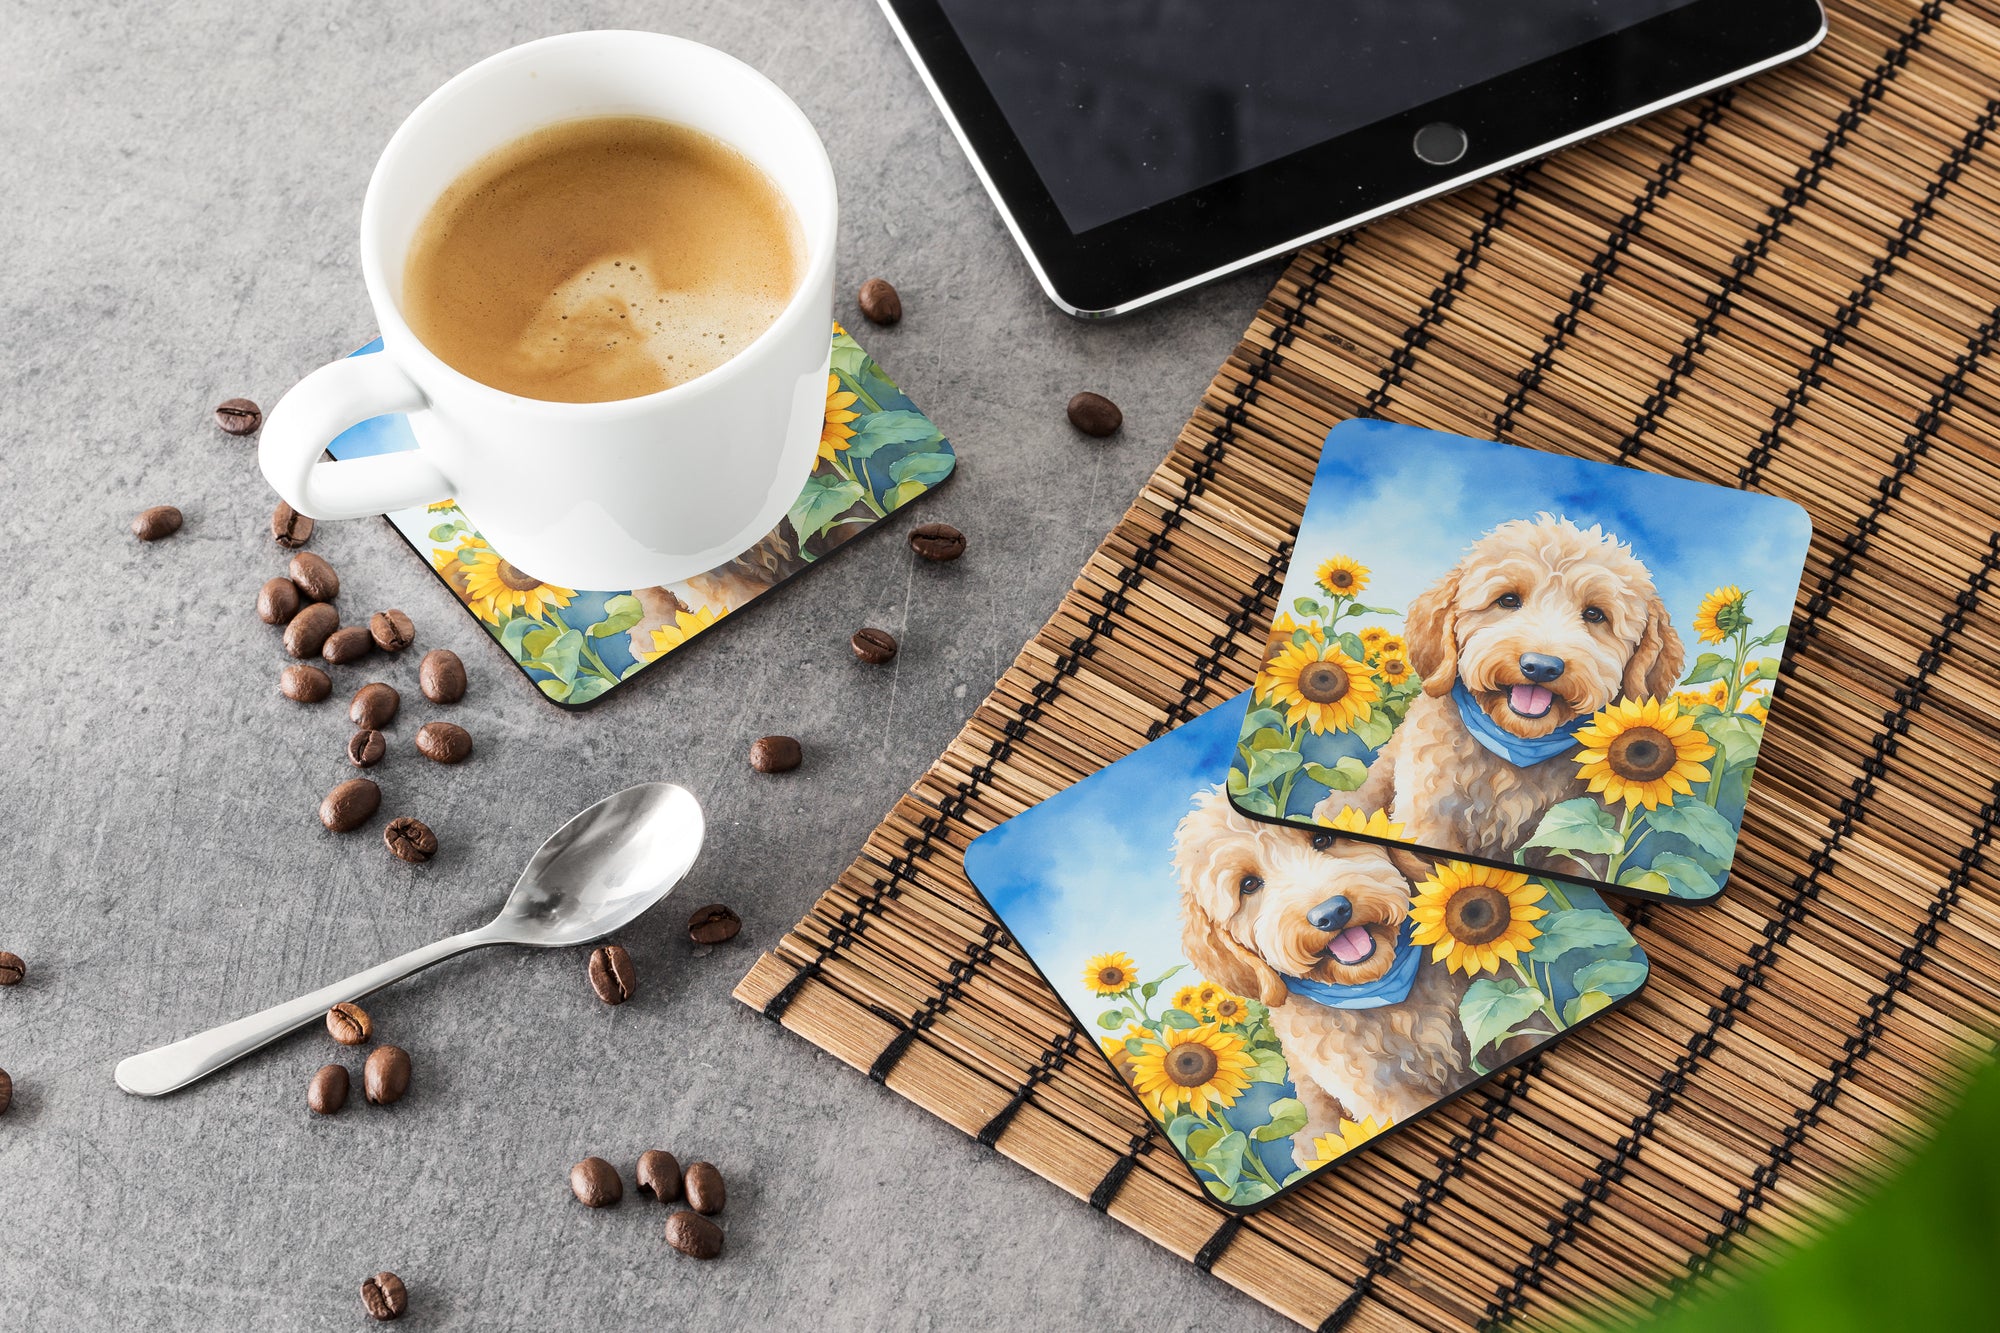 Goldendoodle in Sunflowers Foam Coasters